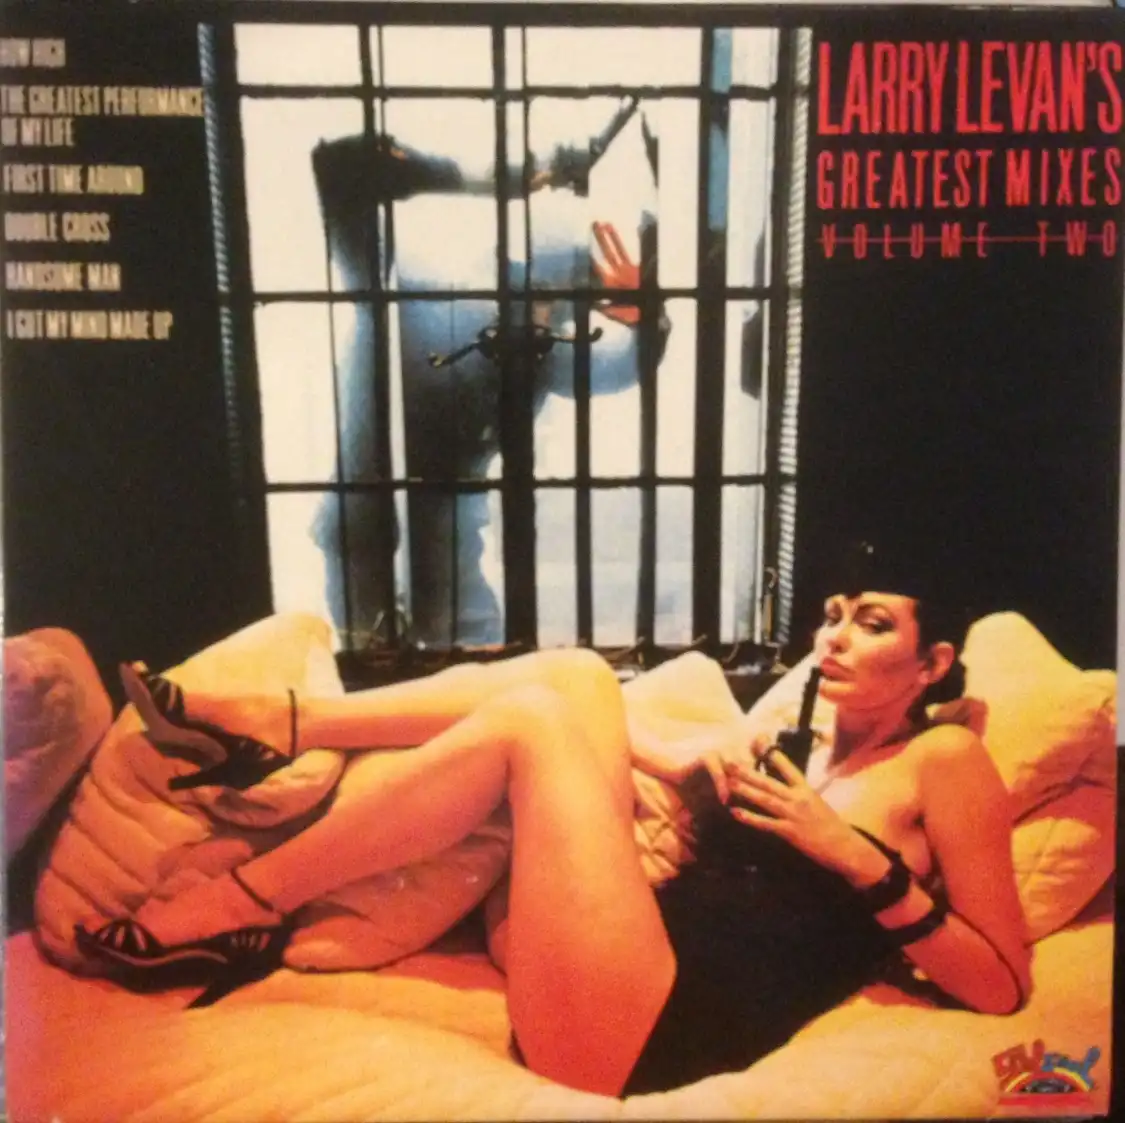 LARRY LEVAN / GREATEST MIXES VOLUME TWO